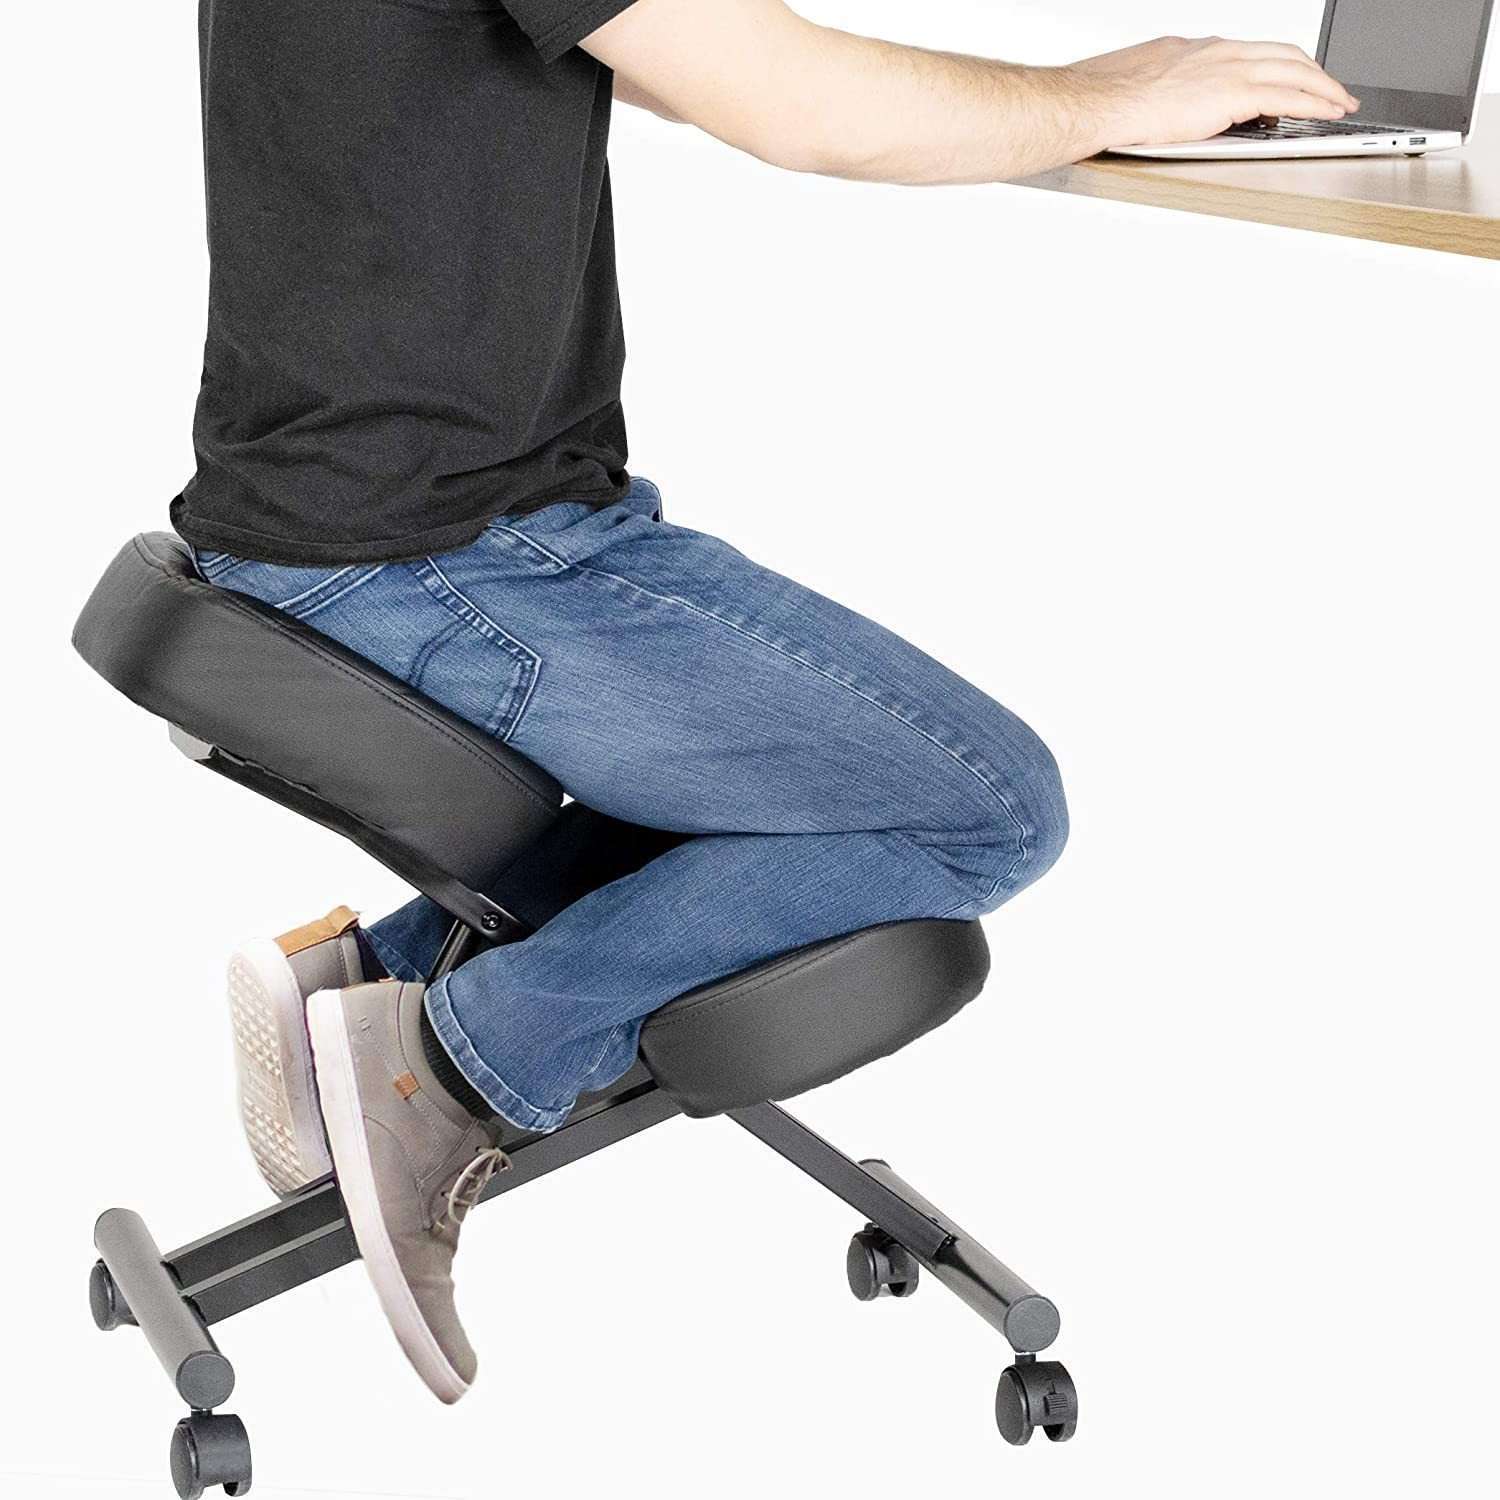 Adjustable Ergonomic Kneeling Chair with Back Support